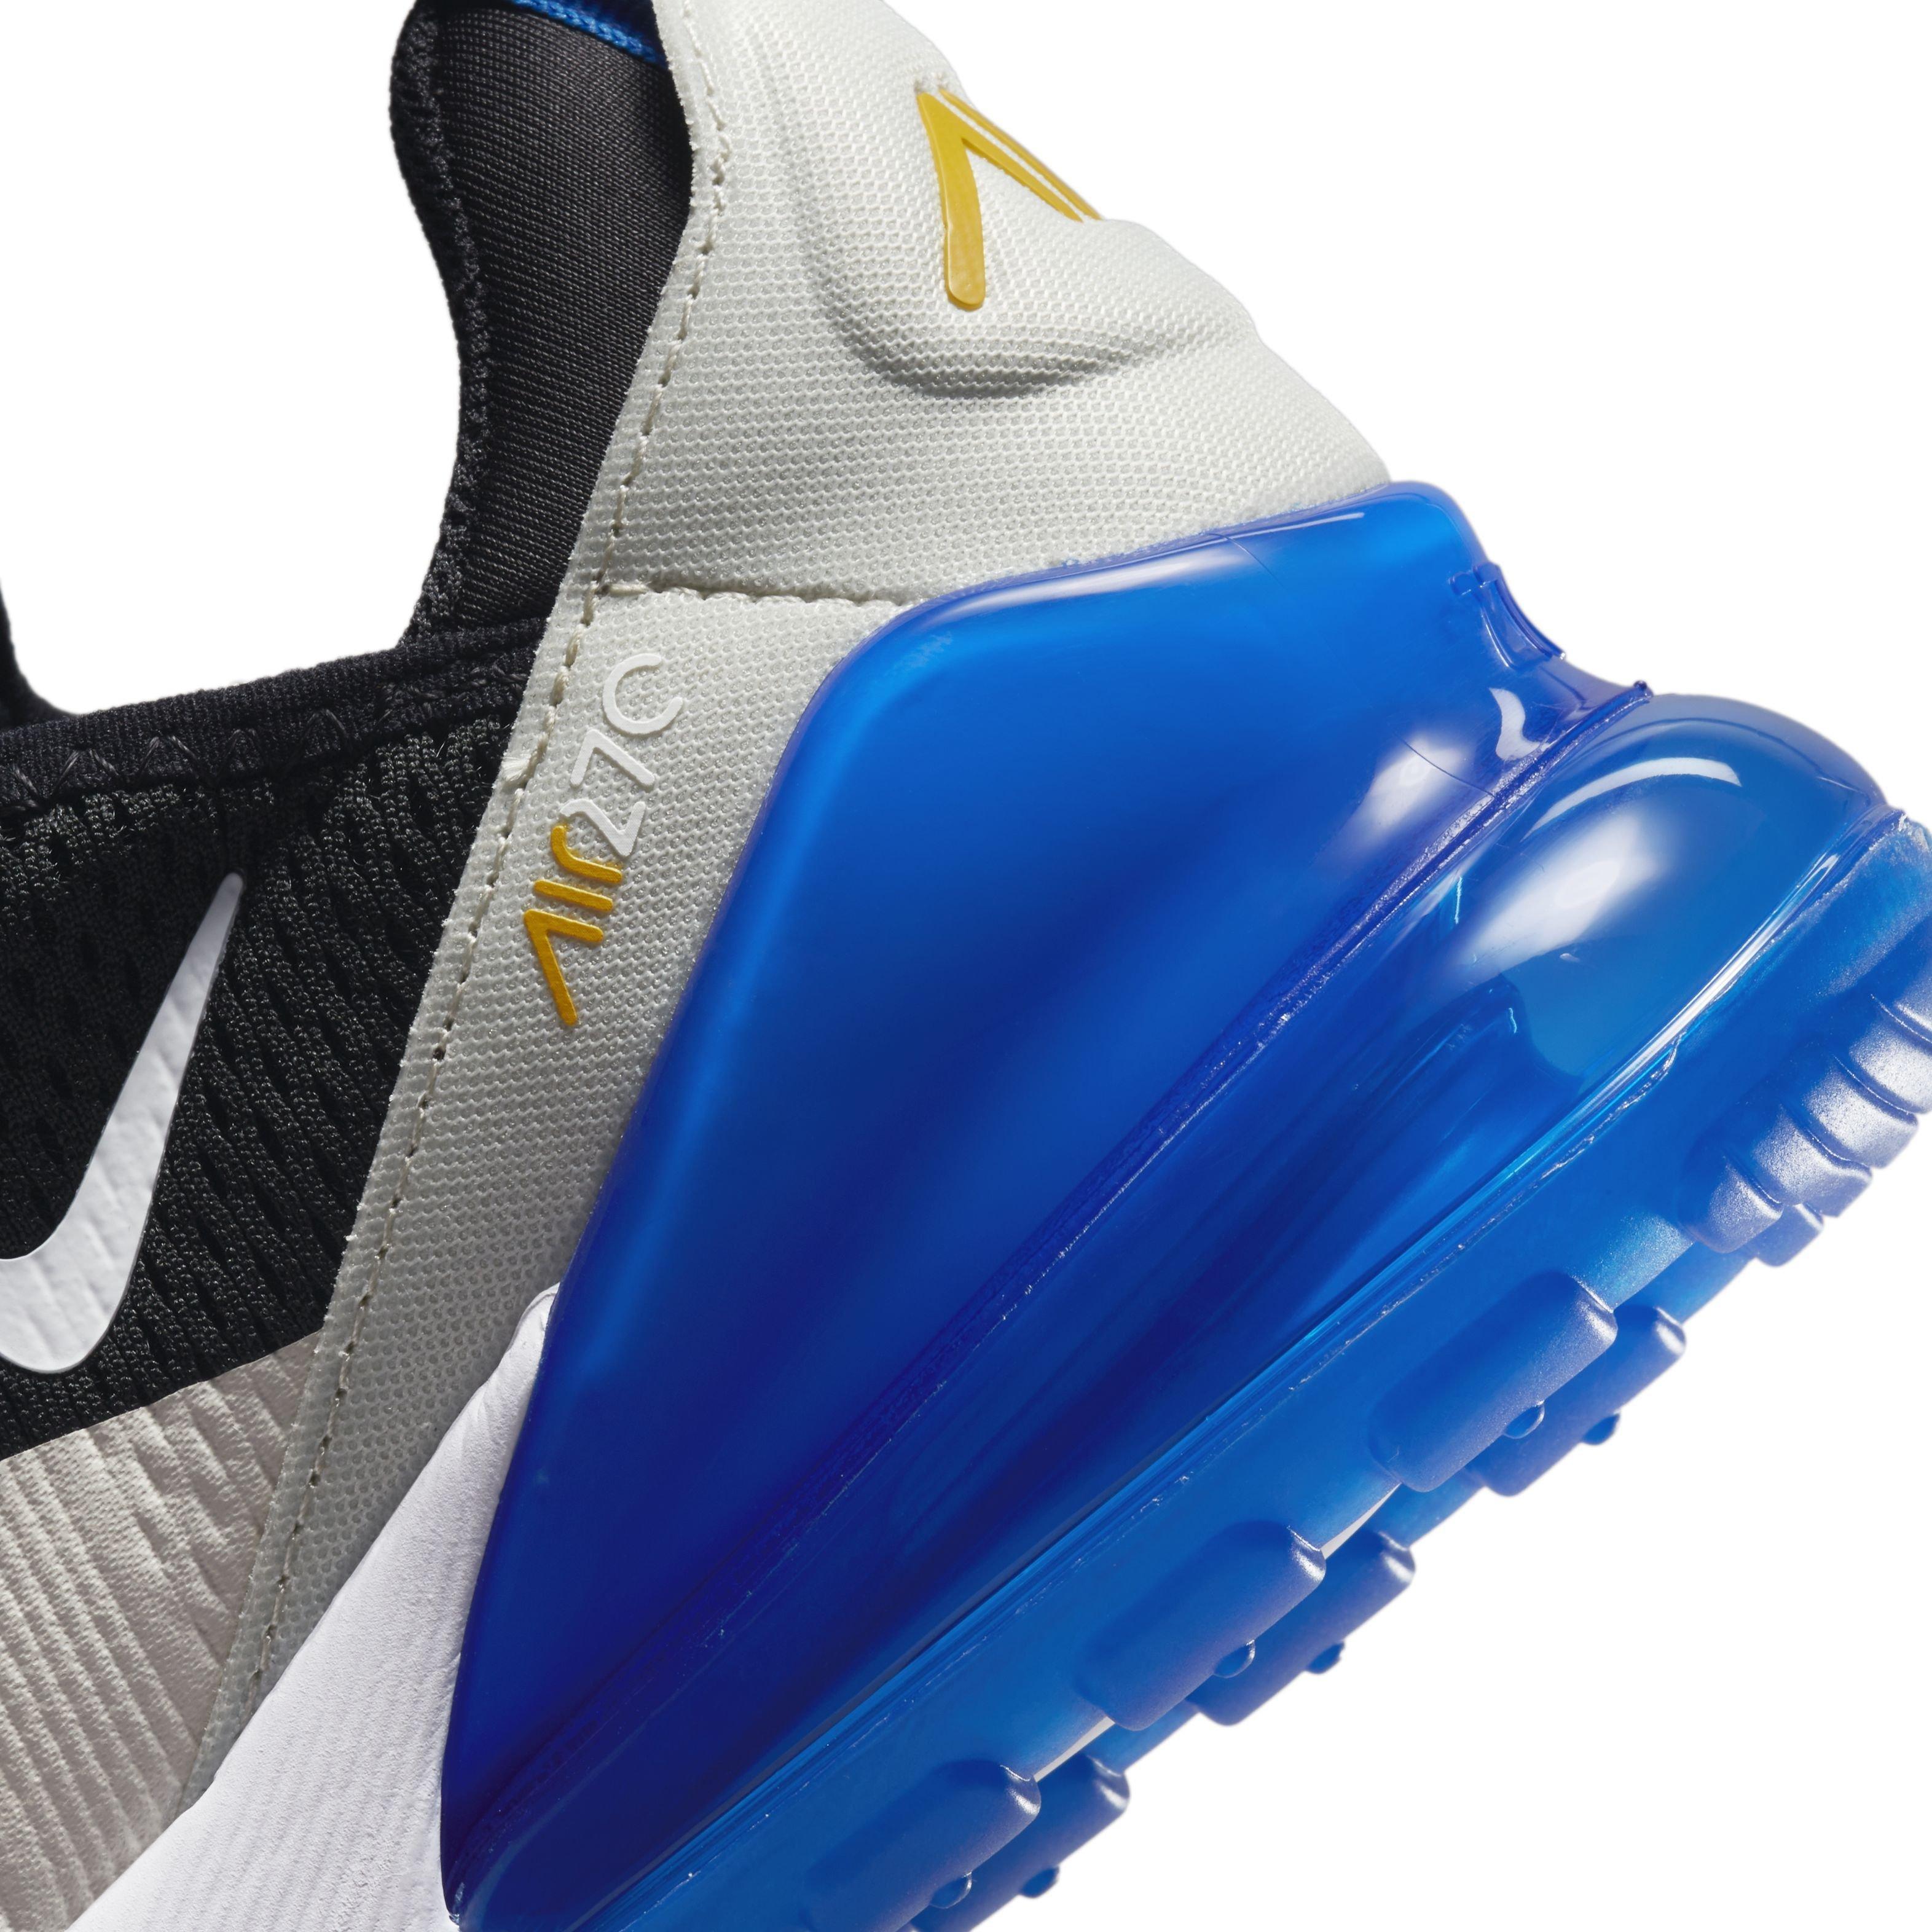 Nike Air Max 720 Royal Blue/Black Men's Shoes - Hibbett